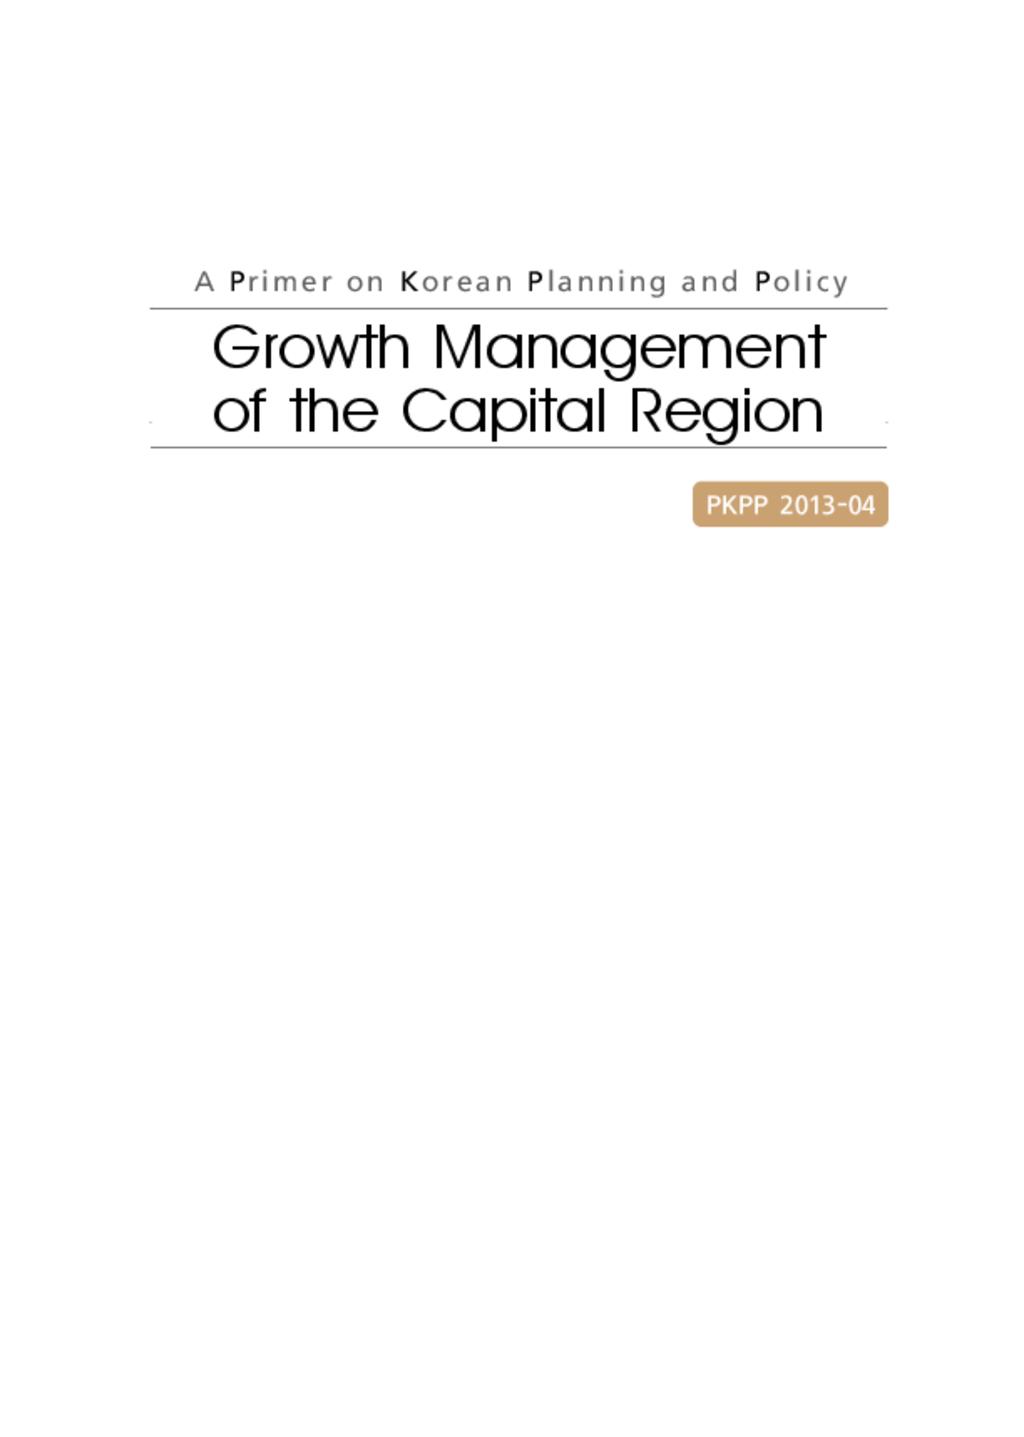 Korea Growth Management System